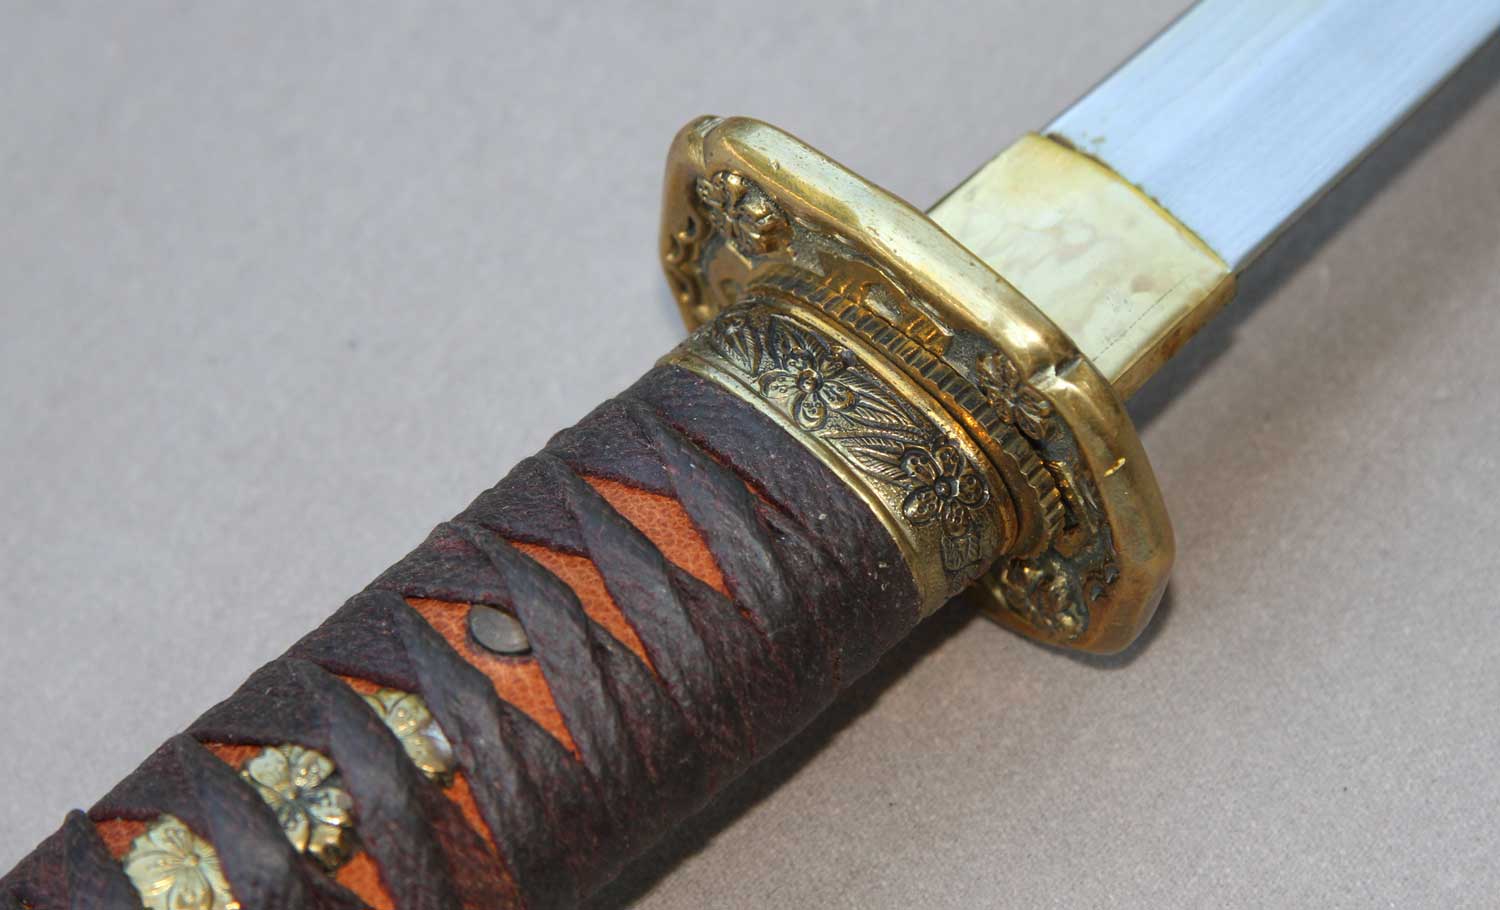 Japanese, Officer's Shin-gunto Sword - Click Image to Close